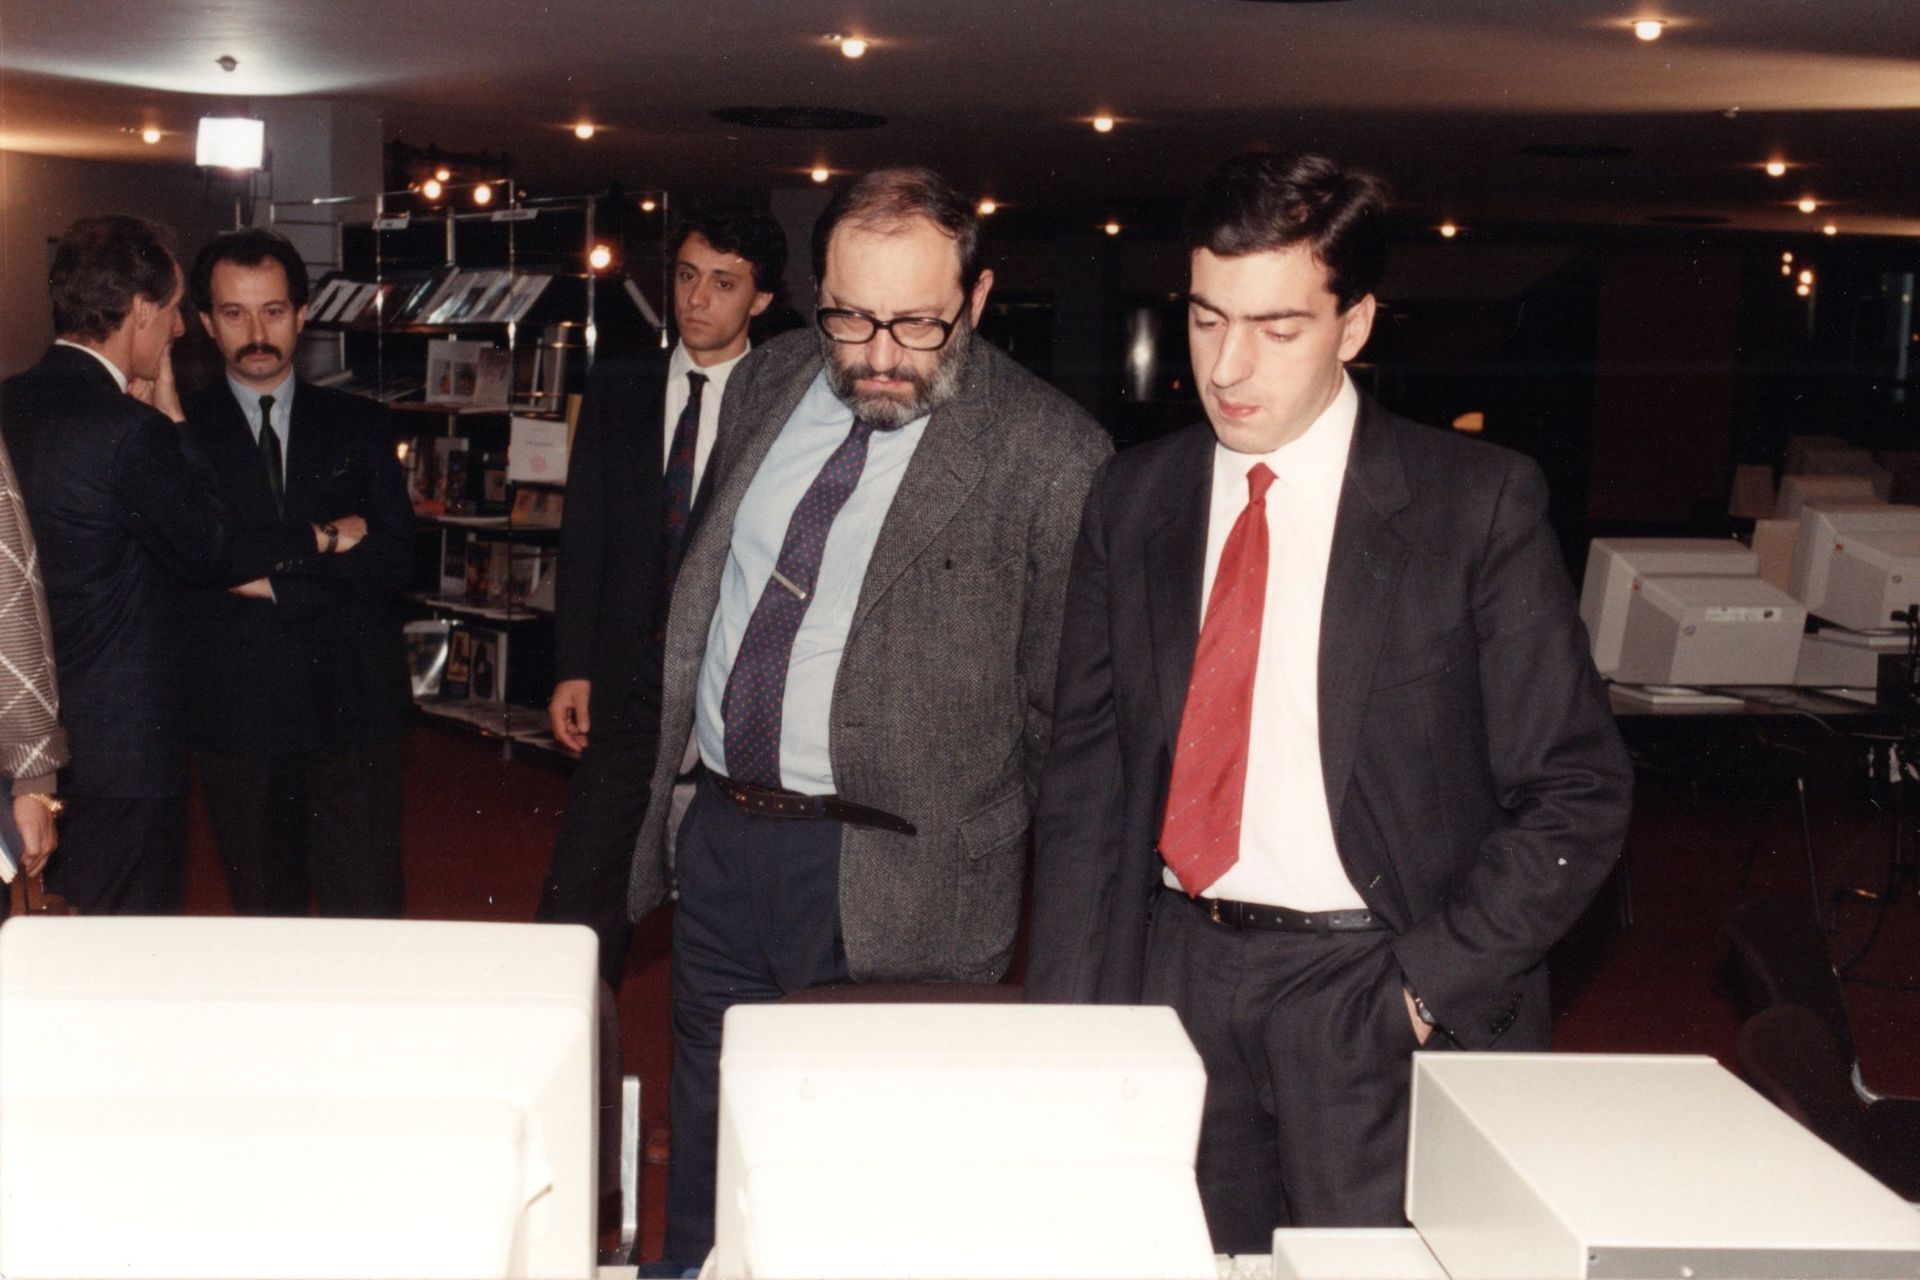 翁貝托·艾柯 (Umberto Eco) 和瓦爾特·弗拉卡羅 (Valter Fraccaro) 於 1989 年在一次公共活動中